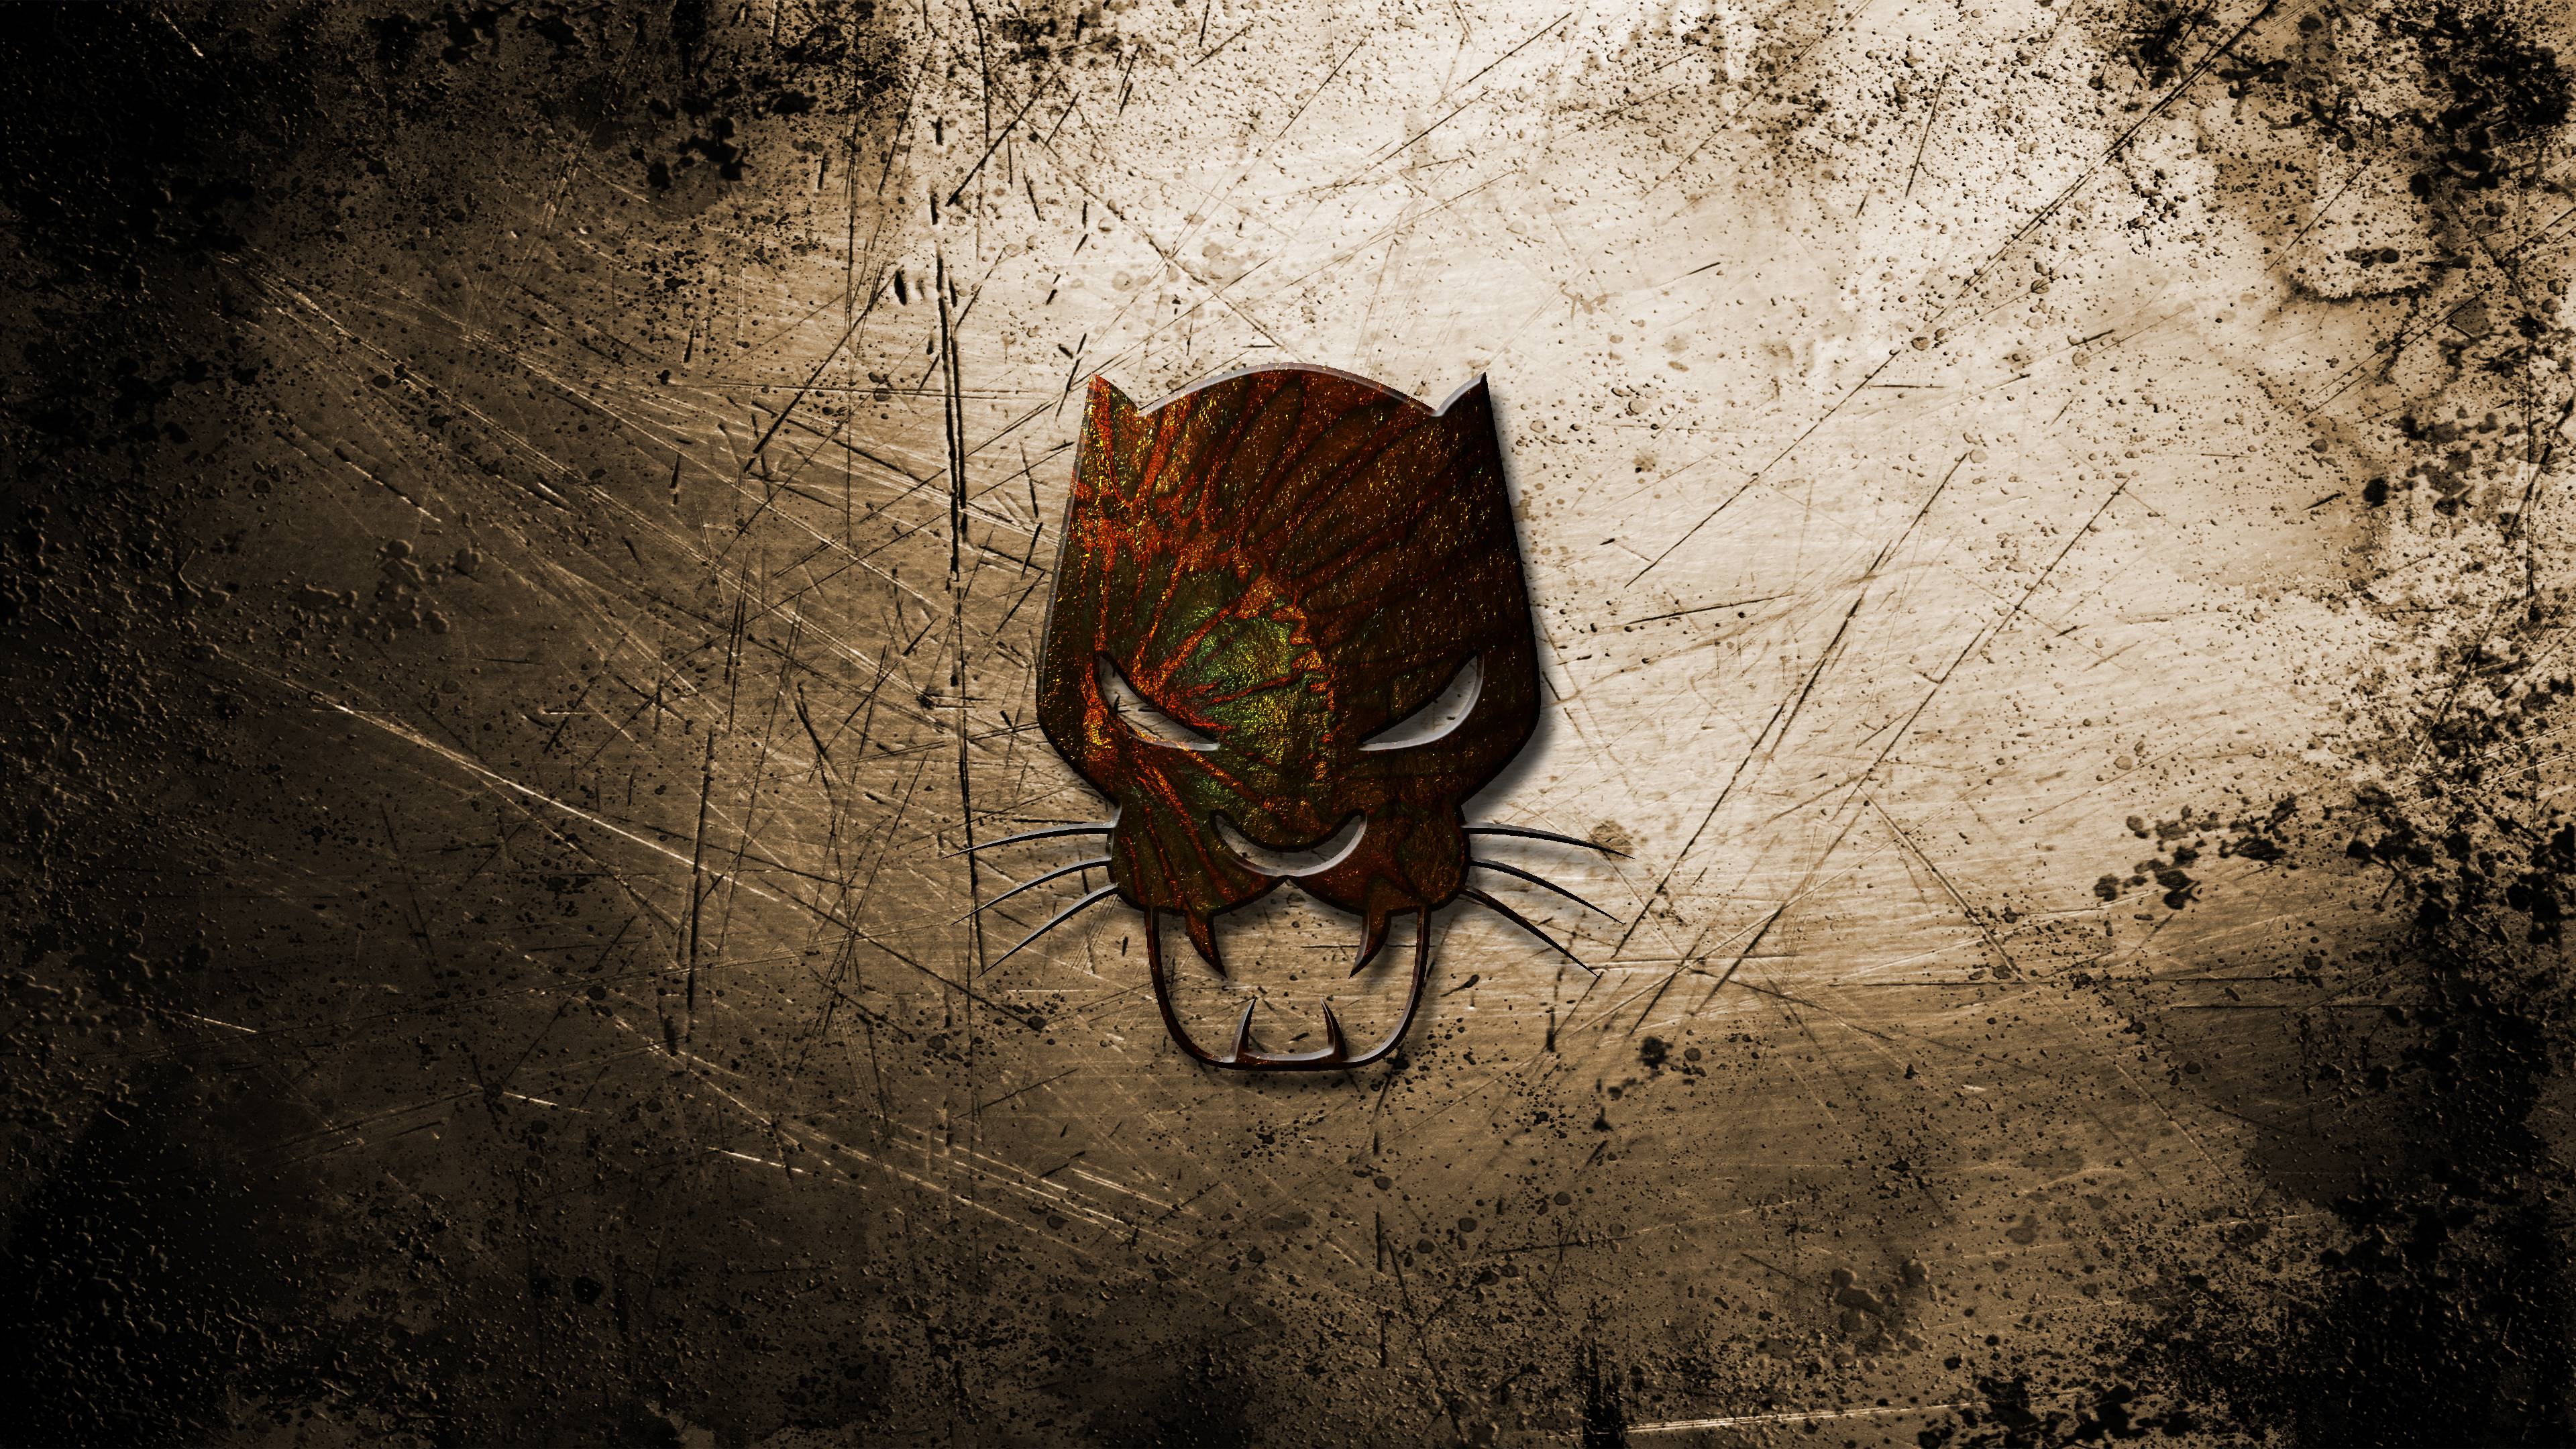 HDQ Black Panther Image Collection for Desktop, VV.21